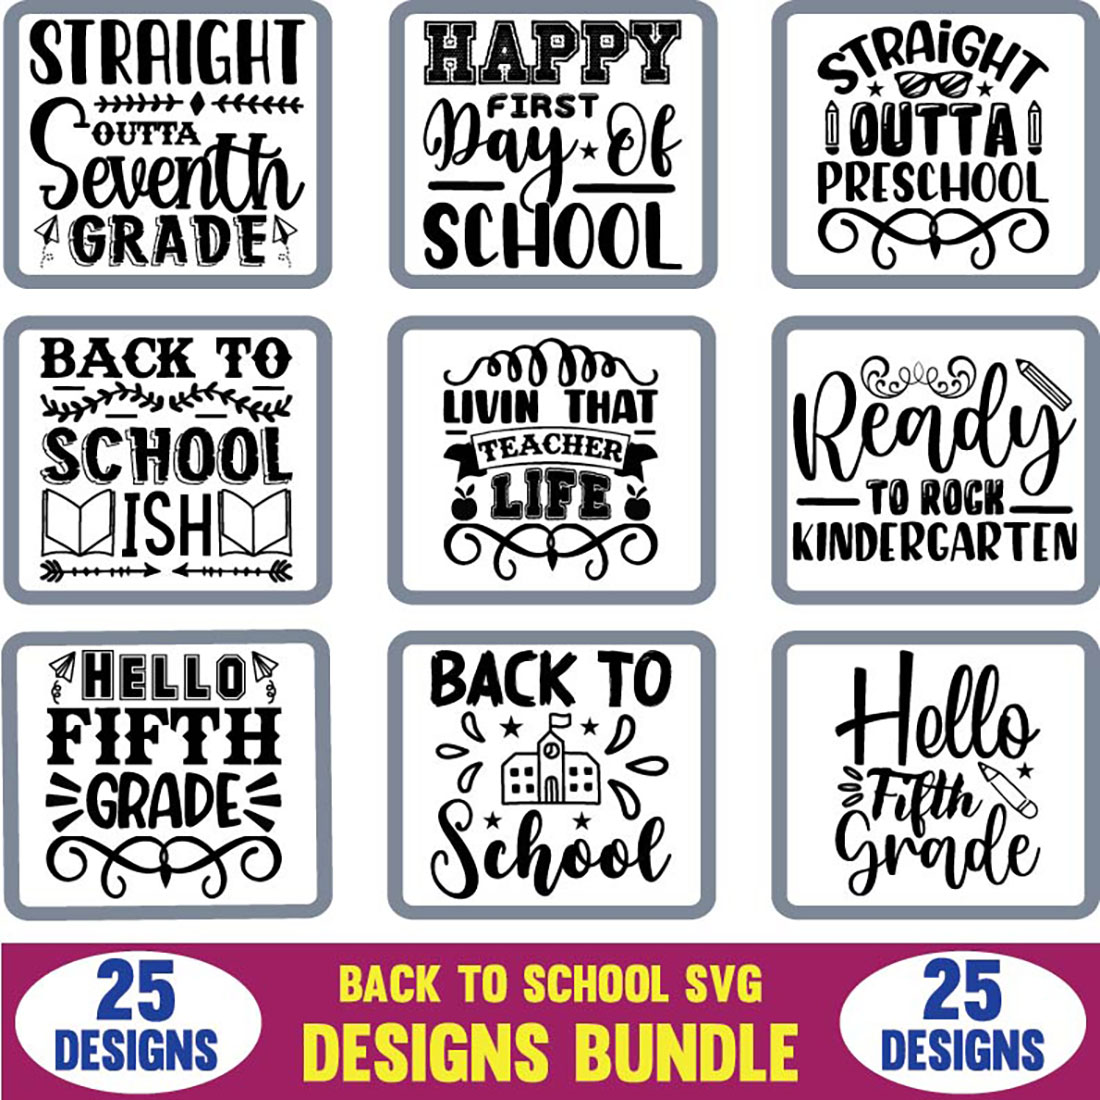 Back To School SVG Designs Bundle cover